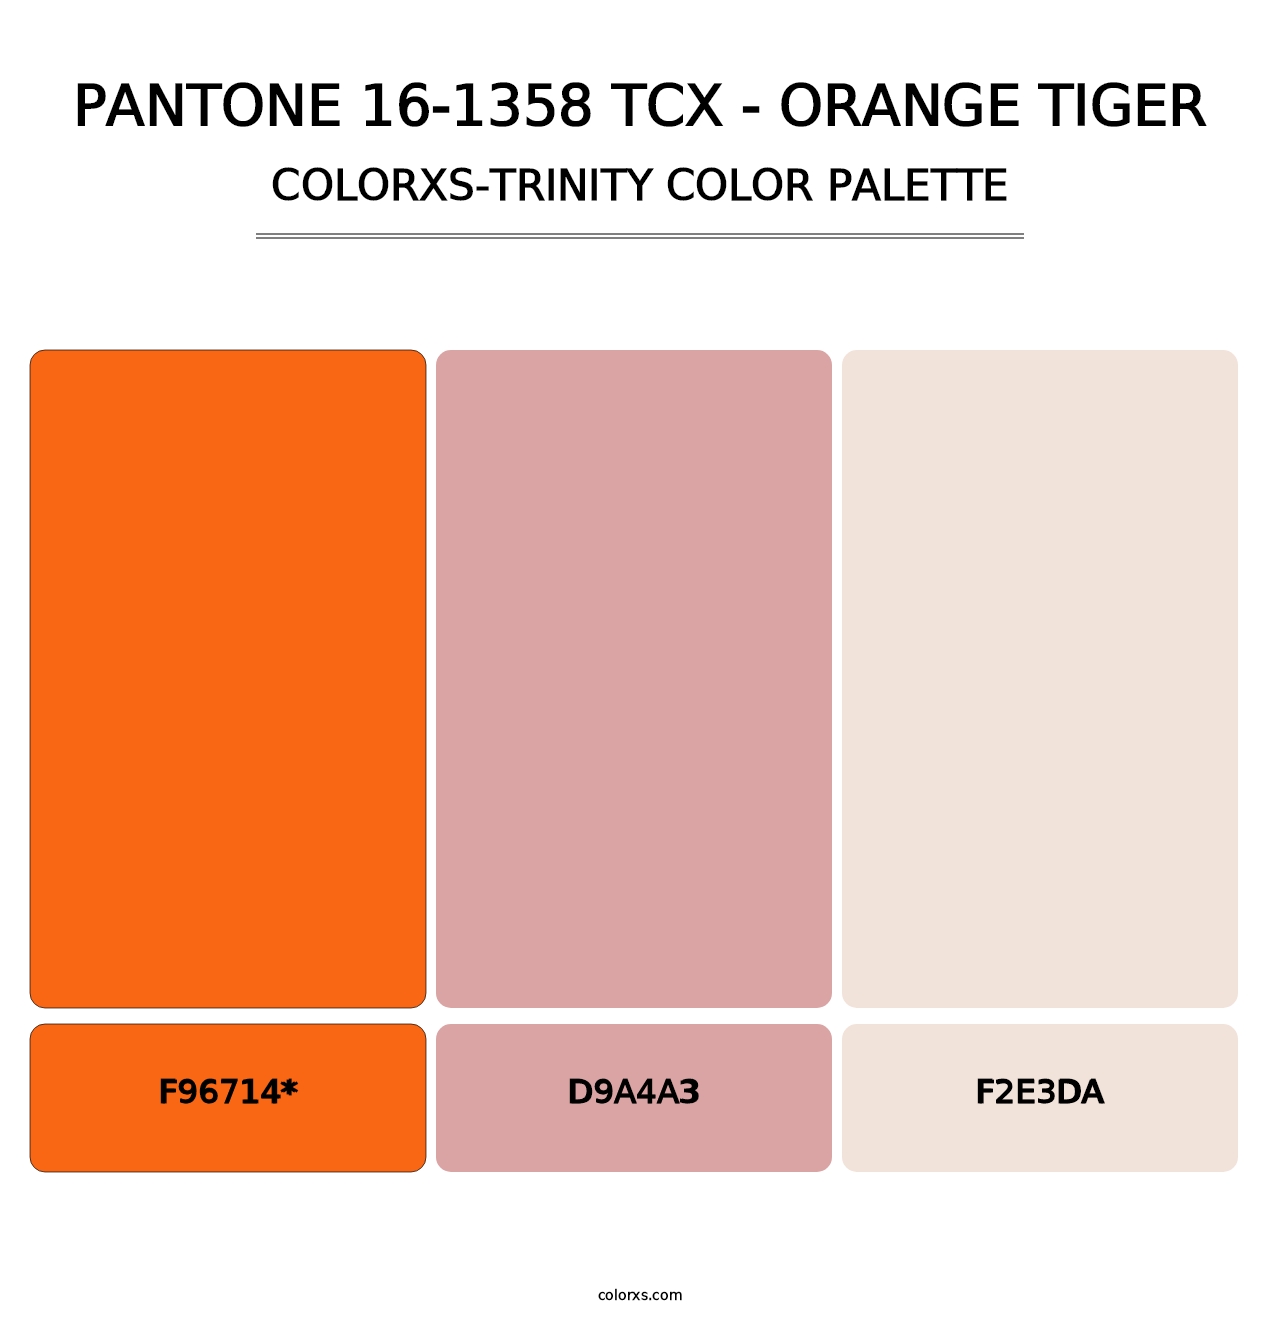 PANTONE 16-1358 TCX - Orange Tiger - Colorxs Trinity Palette